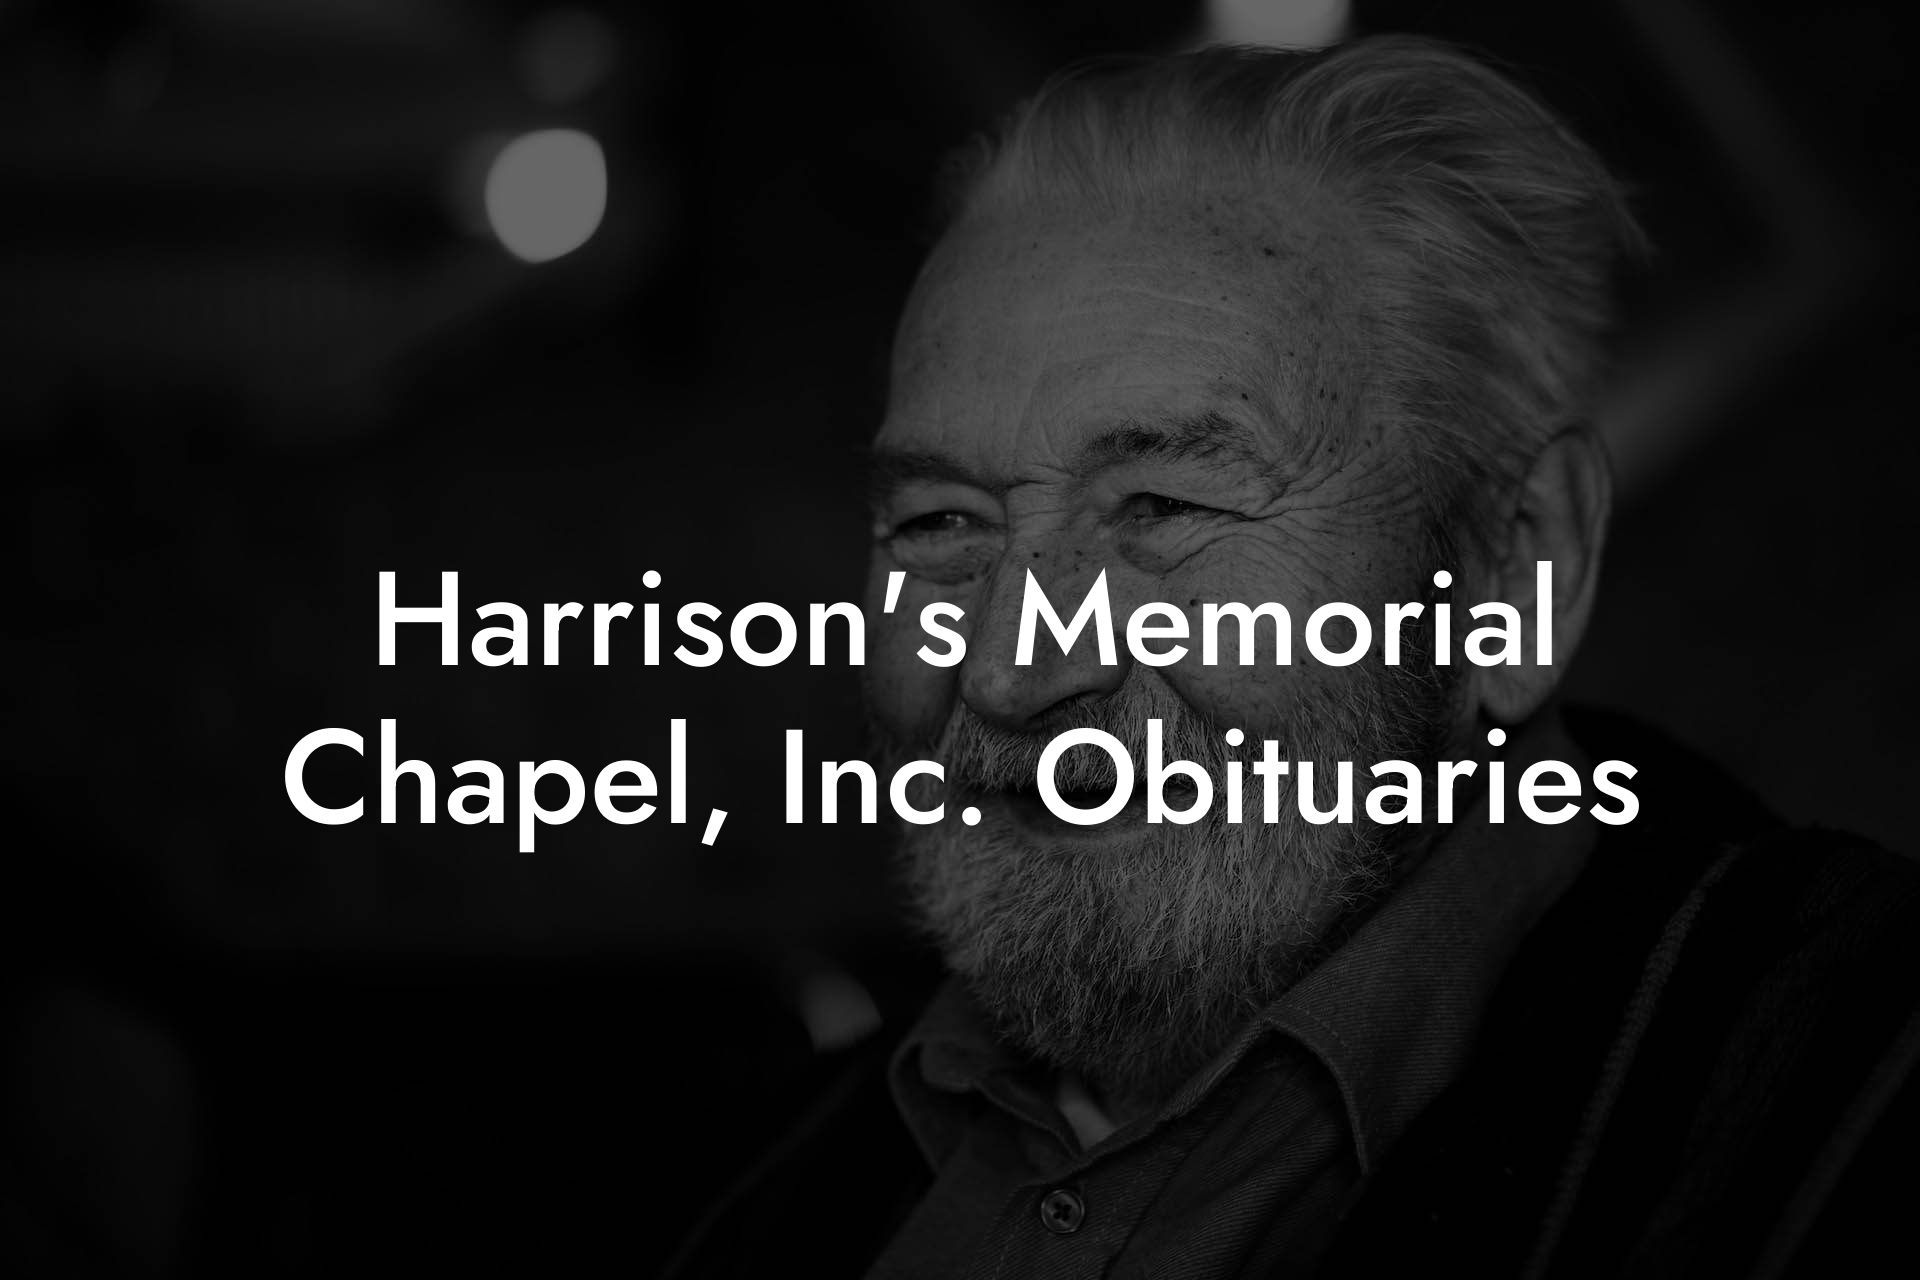 Harrison's Memorial Chapel, Inc. Obituaries